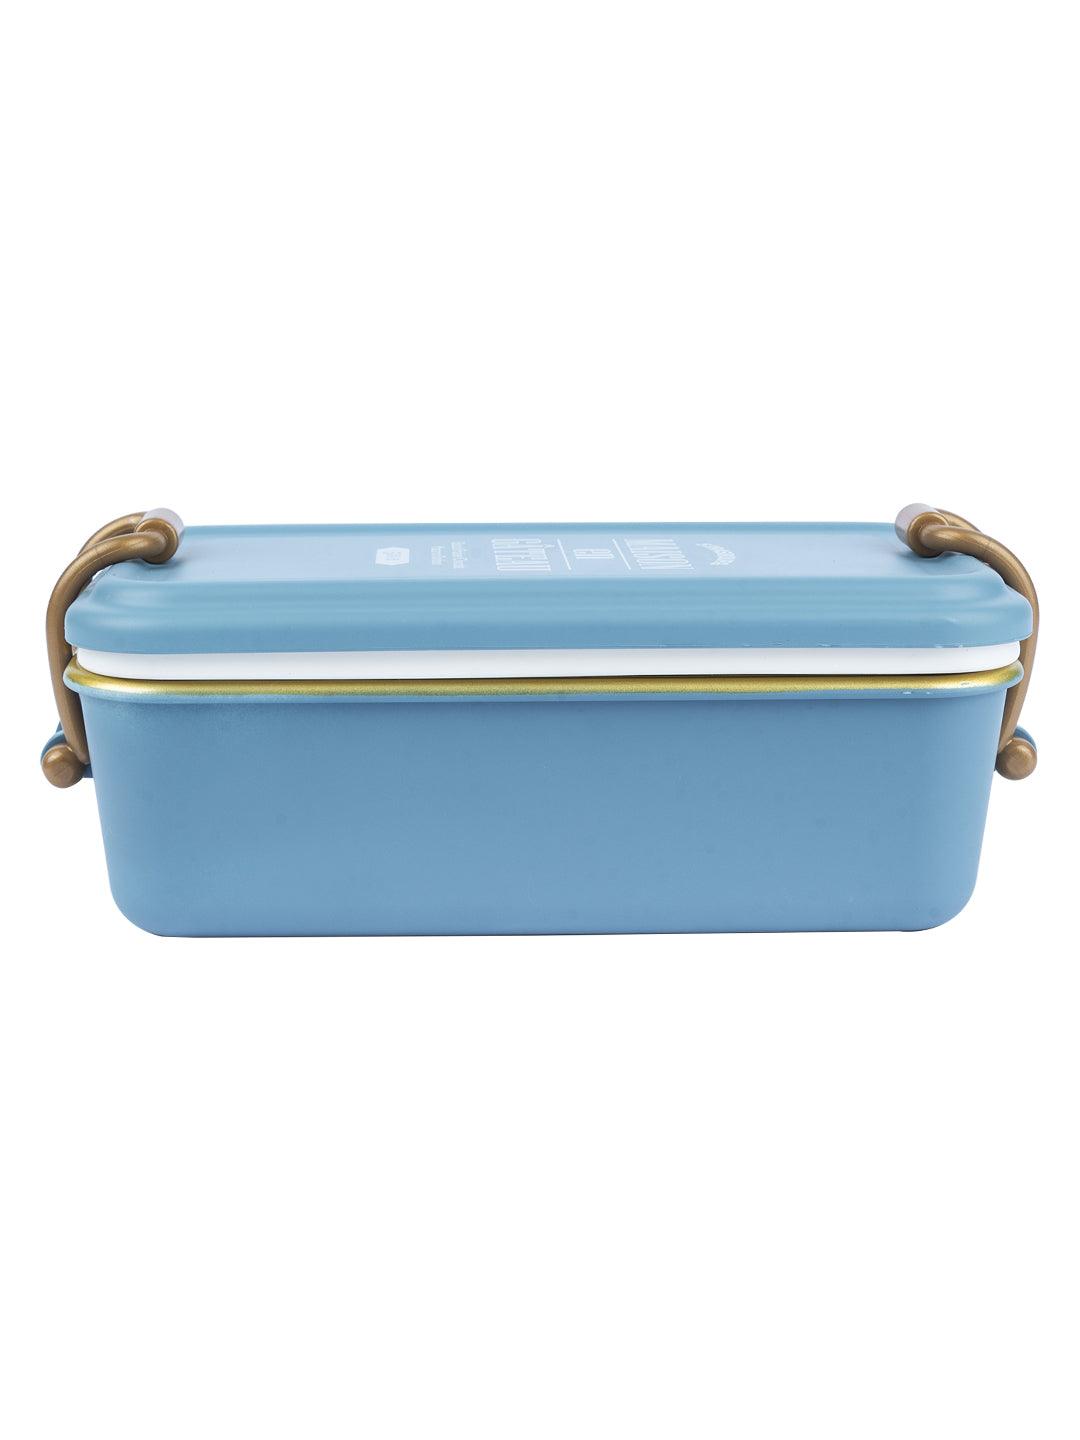 Market 99 Lunch Box (500 mL), Dual Tone, Dark Blue, Plastic - MARKET 99